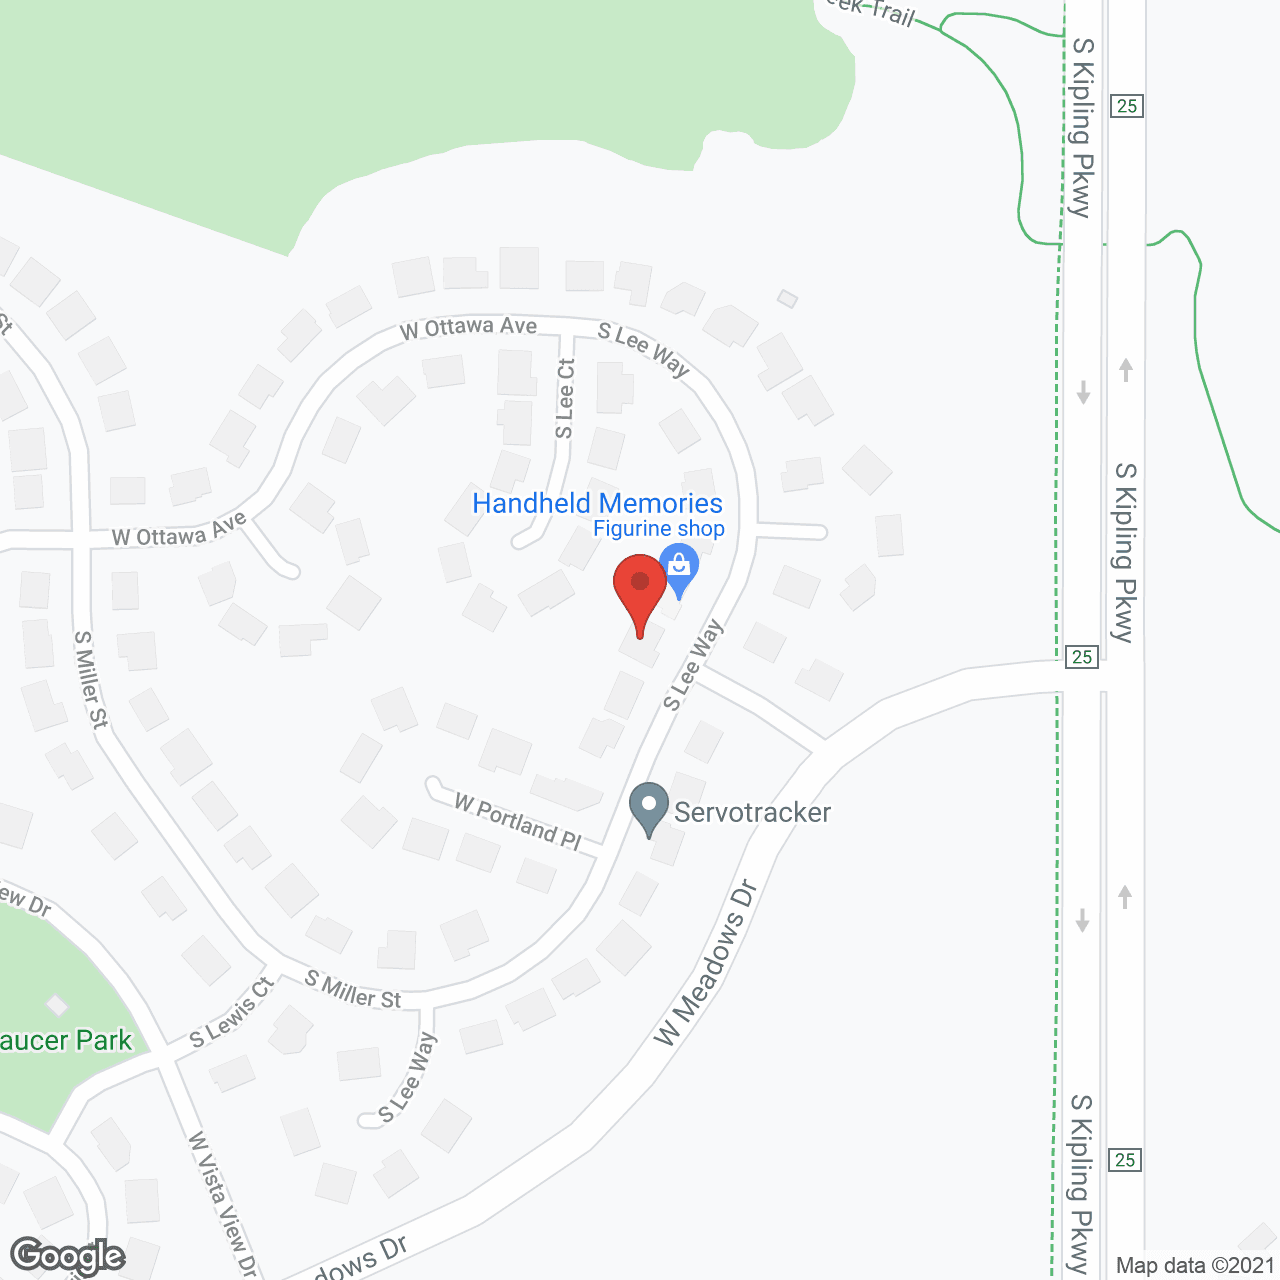 Legacy House Elder Care on Lee in google map